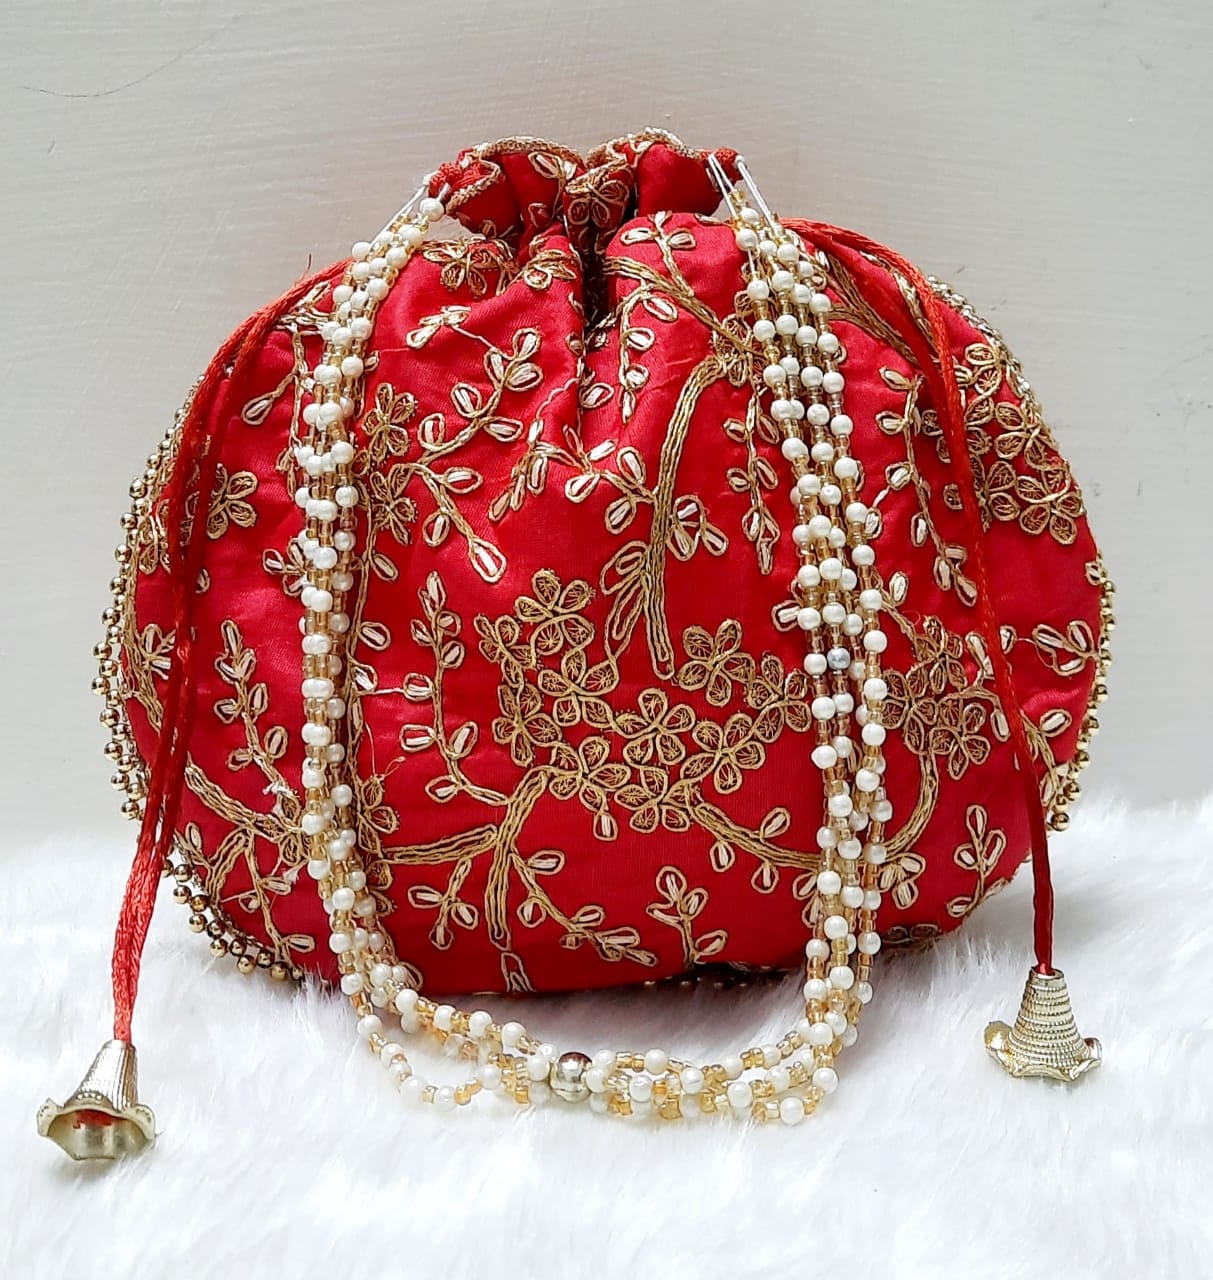 LAMANSH ® Women's Potli Bag Pack of 75 LAMANSH Pack of 75 Pcs Matka Style Tree Pattern Potli bags for women handbags traditional Indian Wristlet